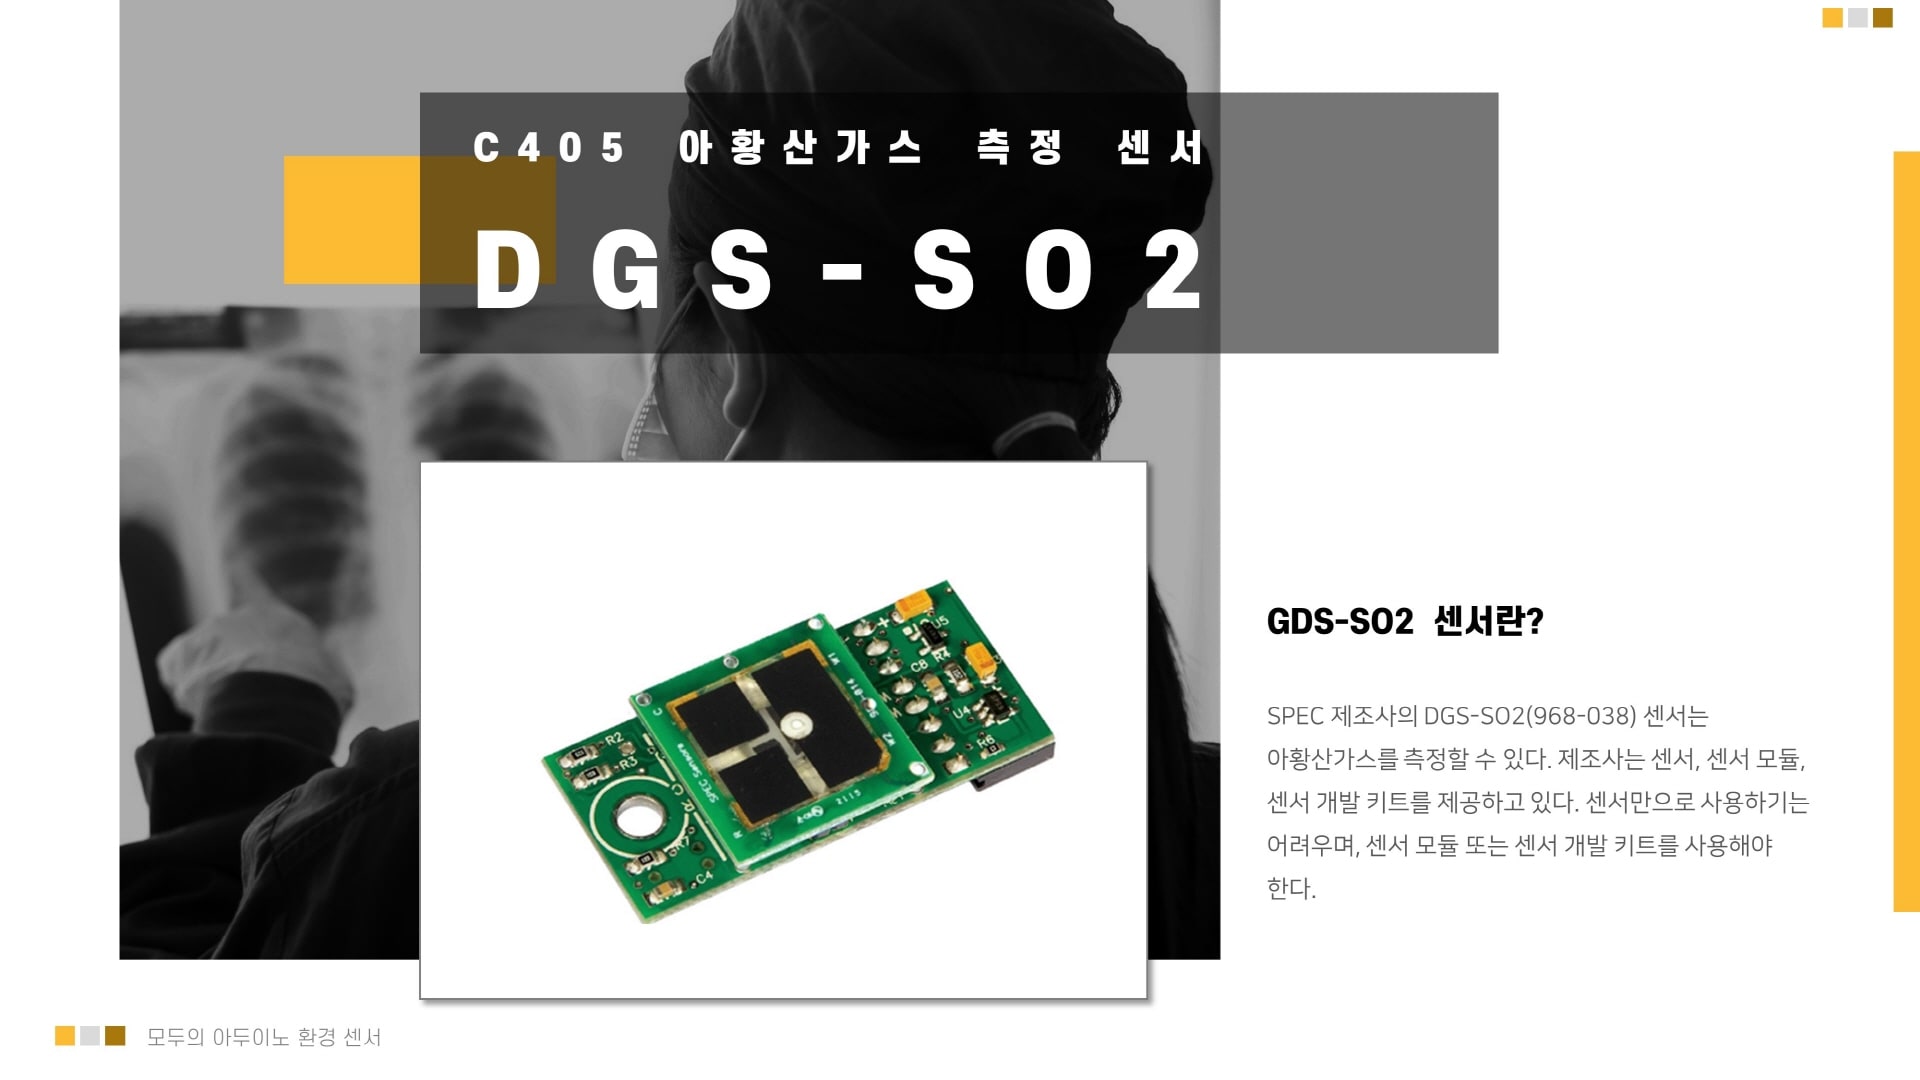 DGS-SO2 아황산가스(SO2) 아두이노 센서 이미지 입니다.